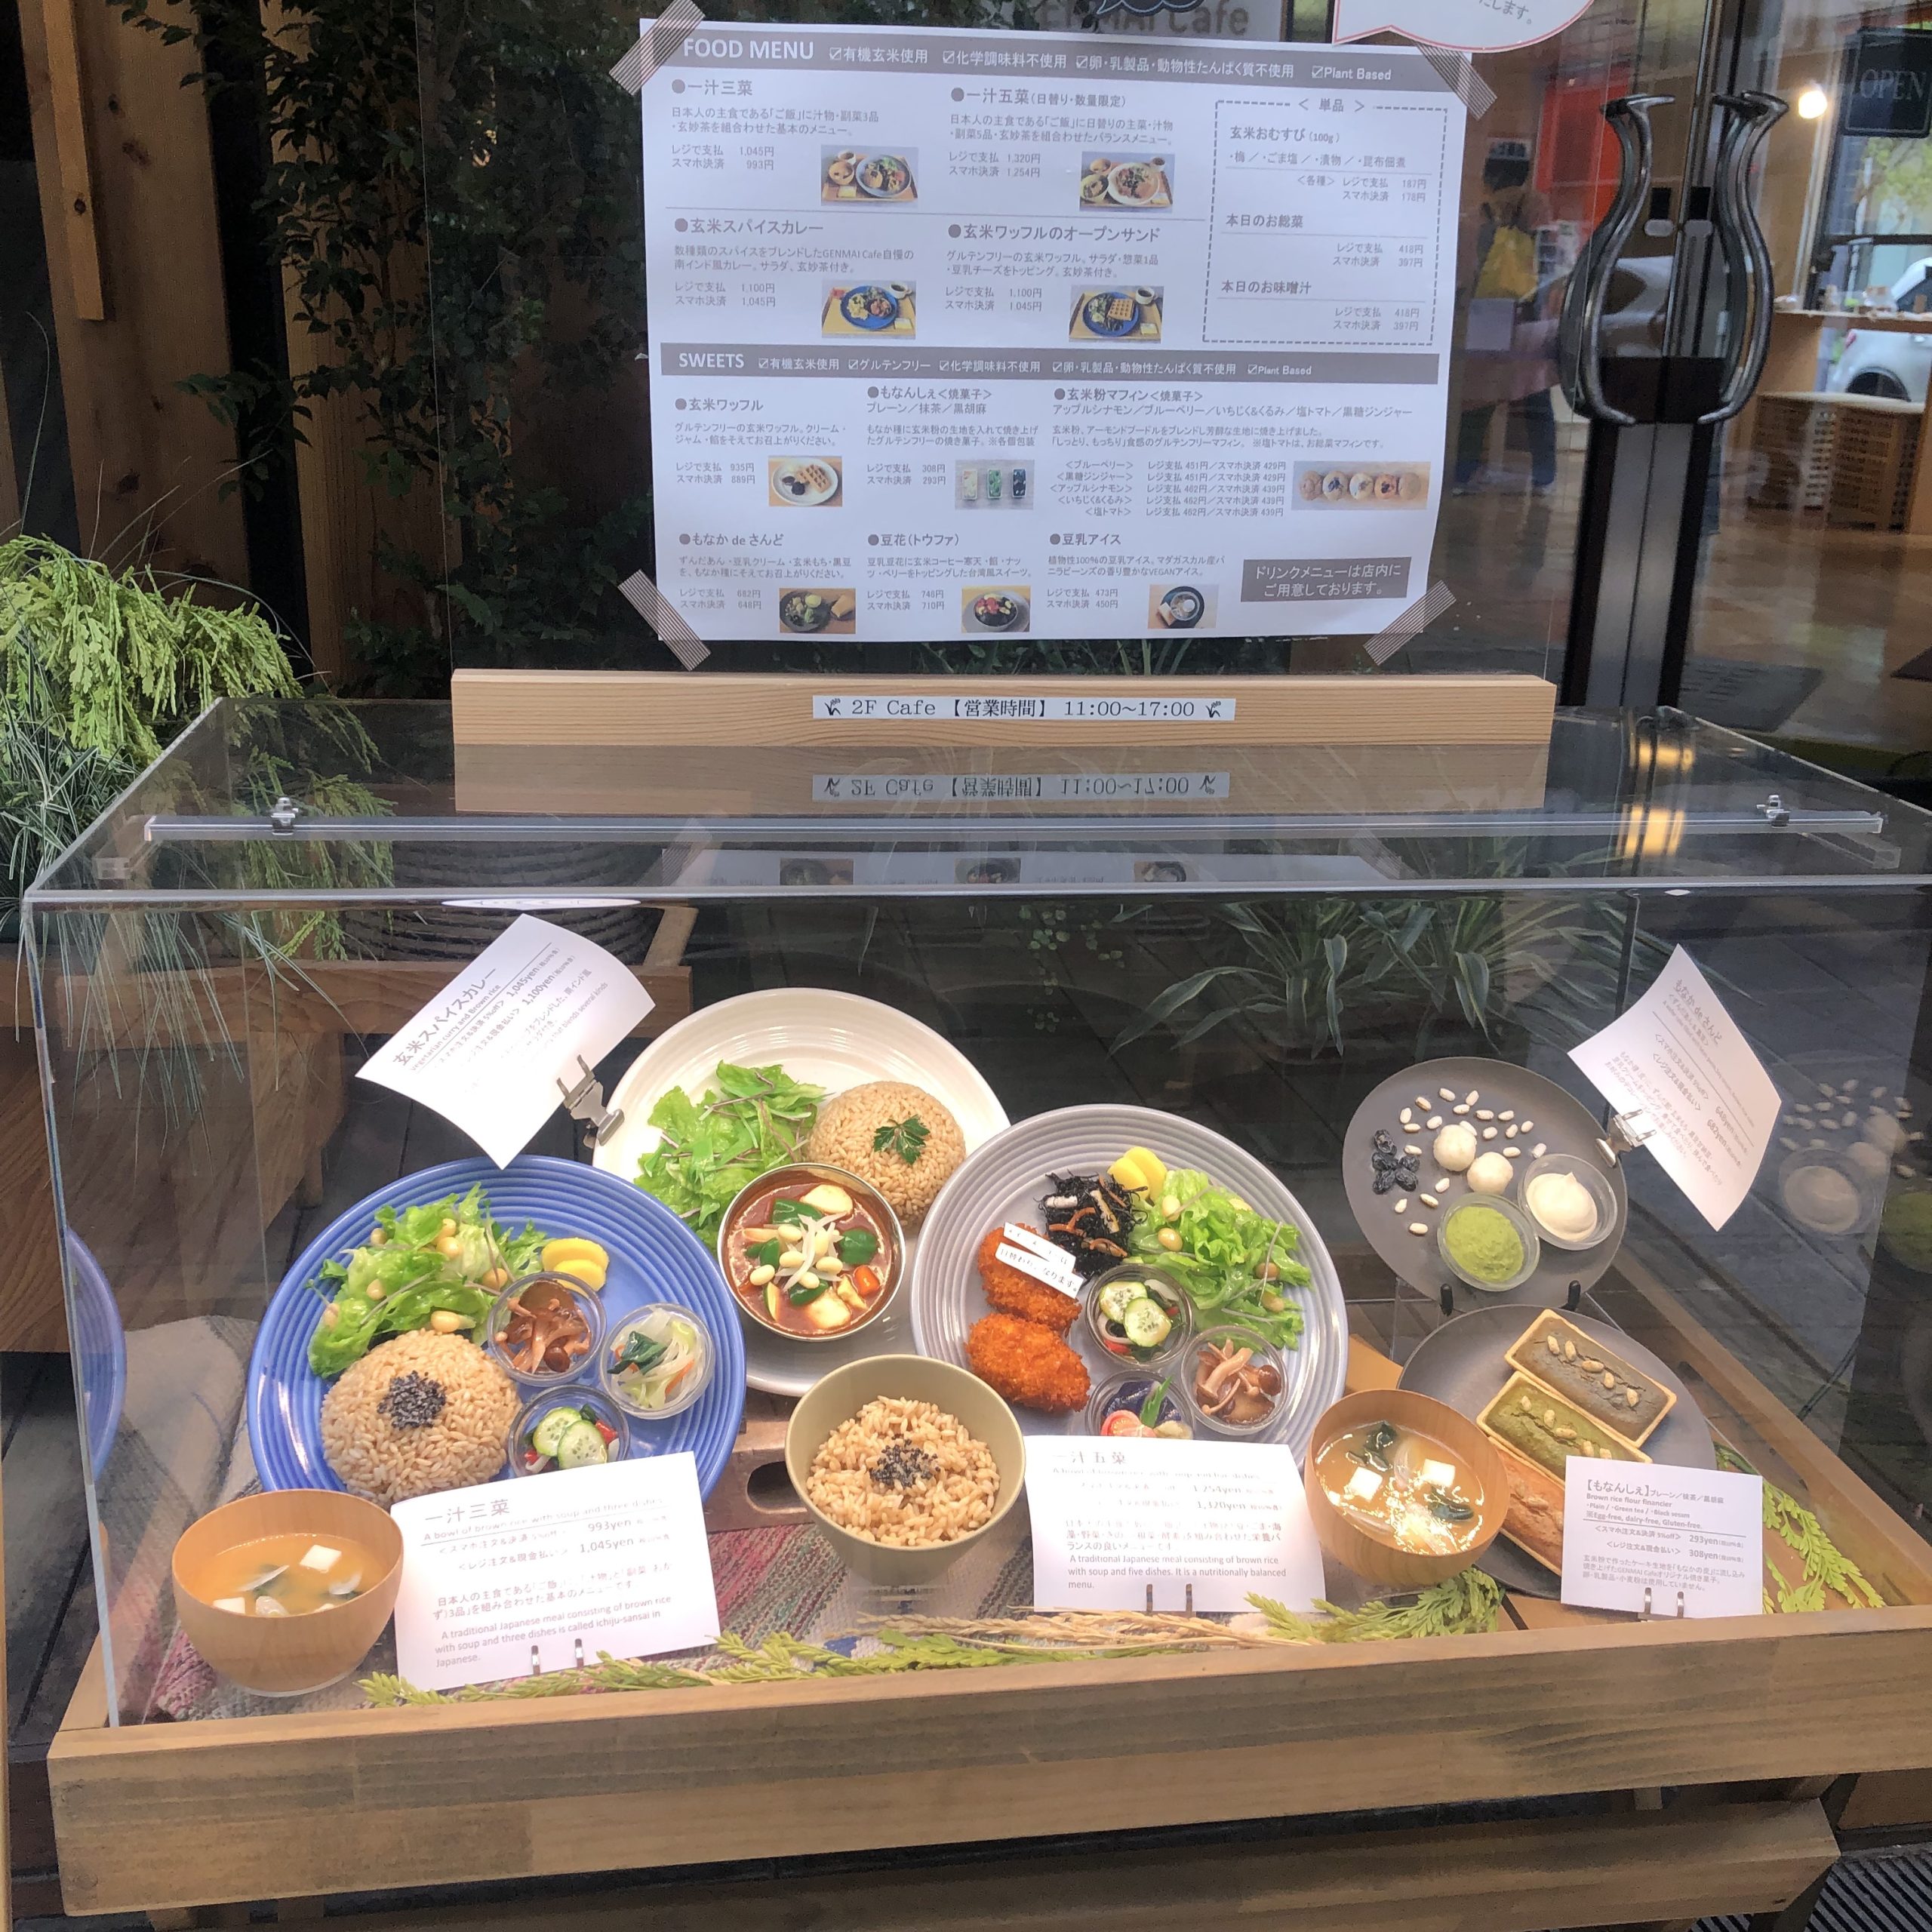 Vegan organic Japanese lunch at Genmai café: Osaka